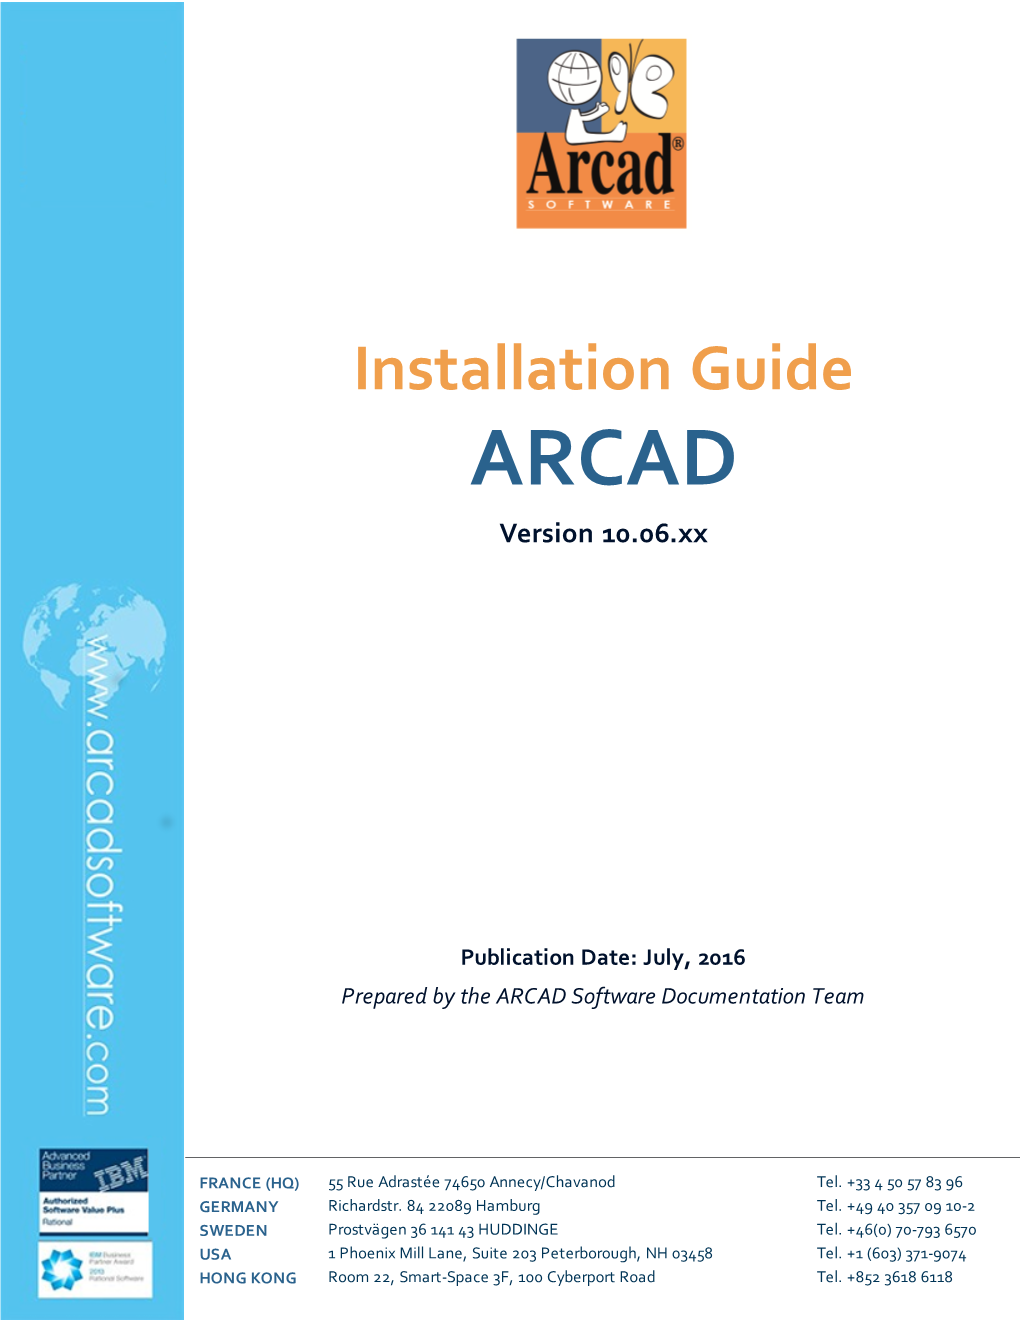 ARCAD Installation Guide Publication Record